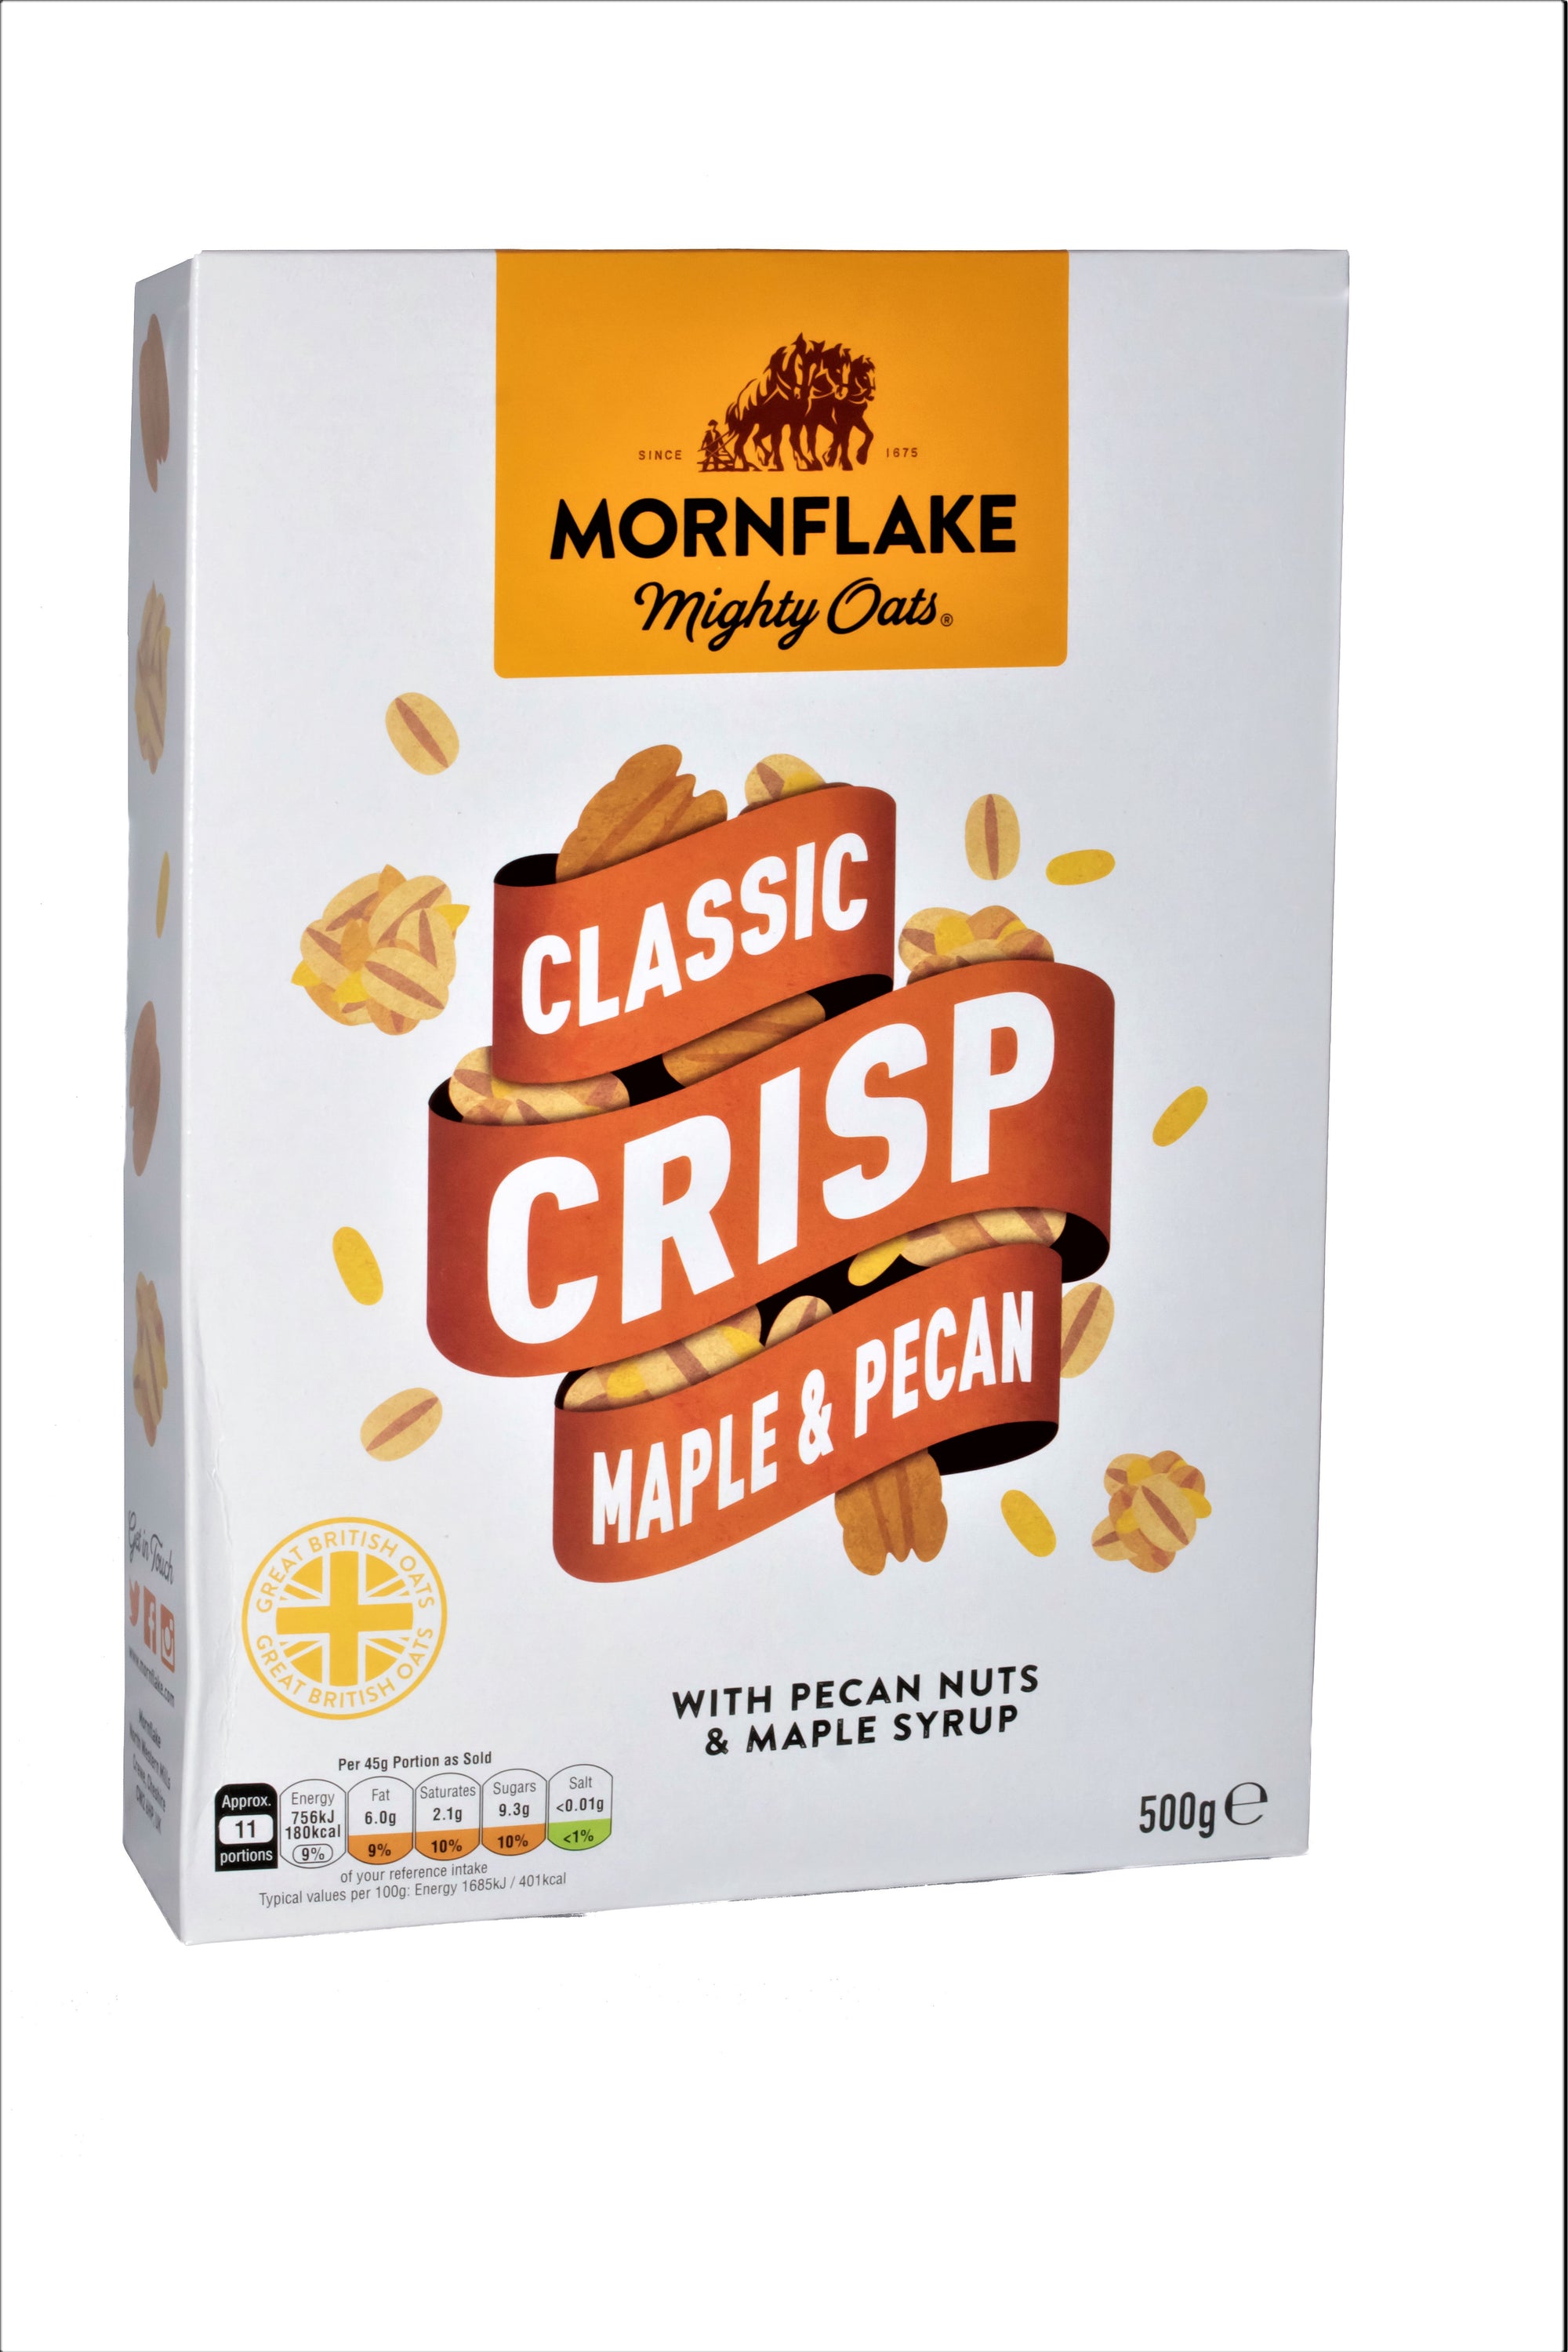 MORNFLAKE Oats Maple & Pecan 500 g